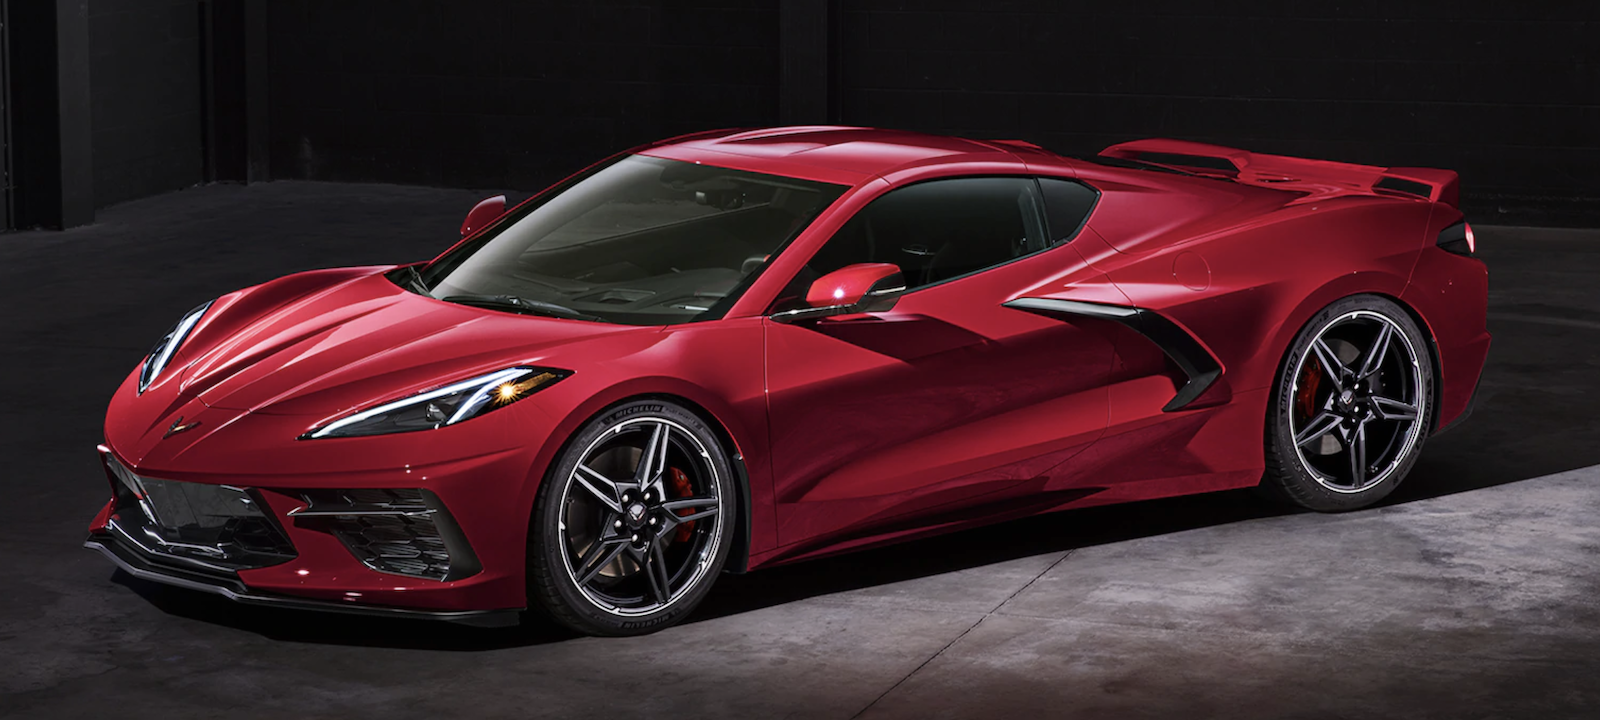 2020 Corvette: Our Design Critic Rates The New Mid-Engine Corvette